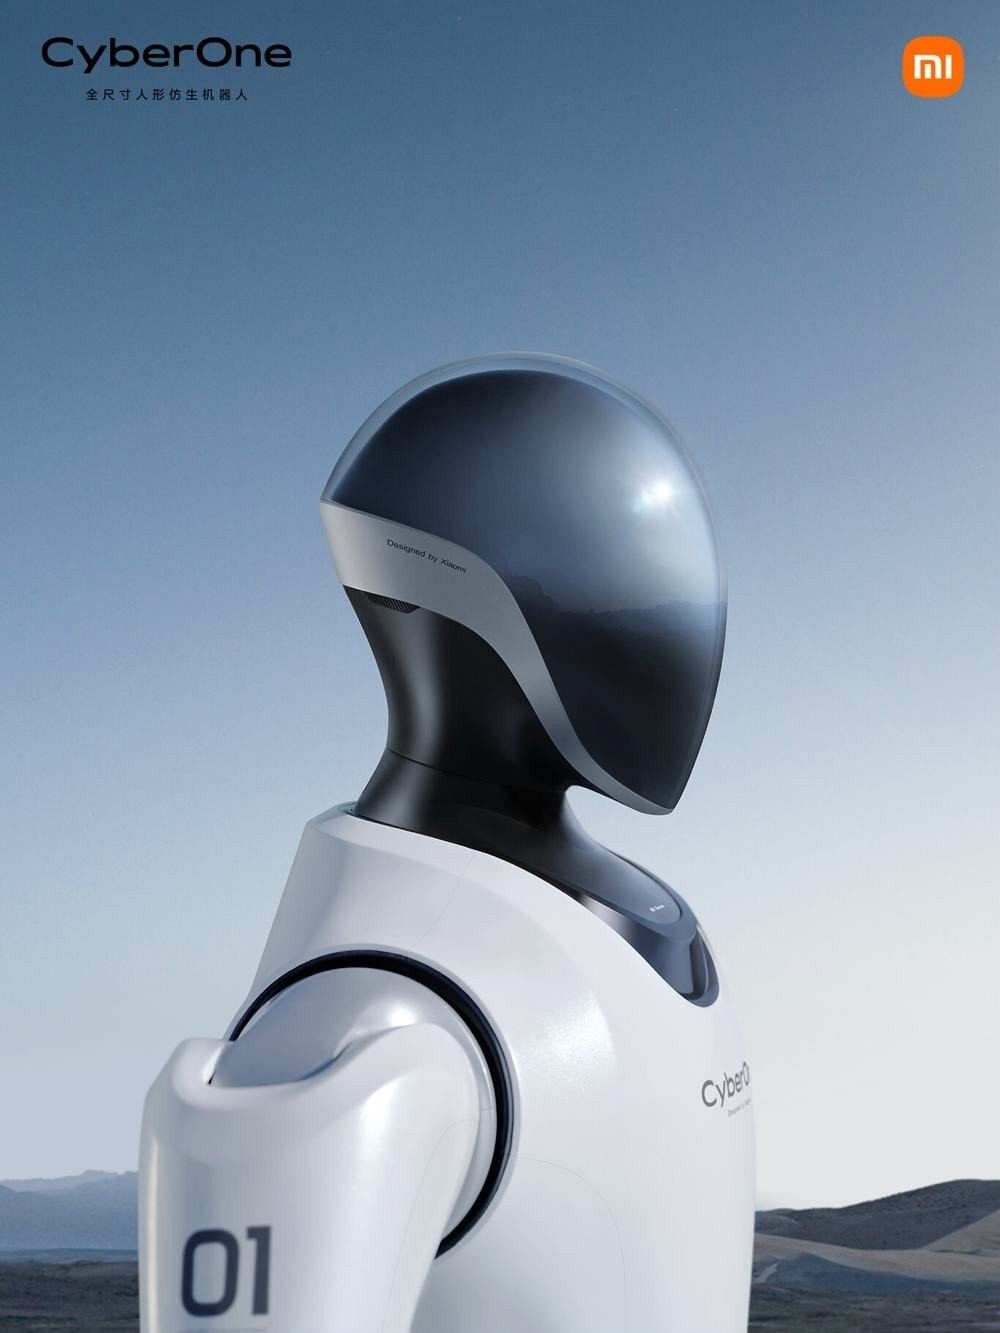 Xiaomi CyberOne: Το εντυπωσιακό ανθρωποειδές ρομπότ της εταιρείας